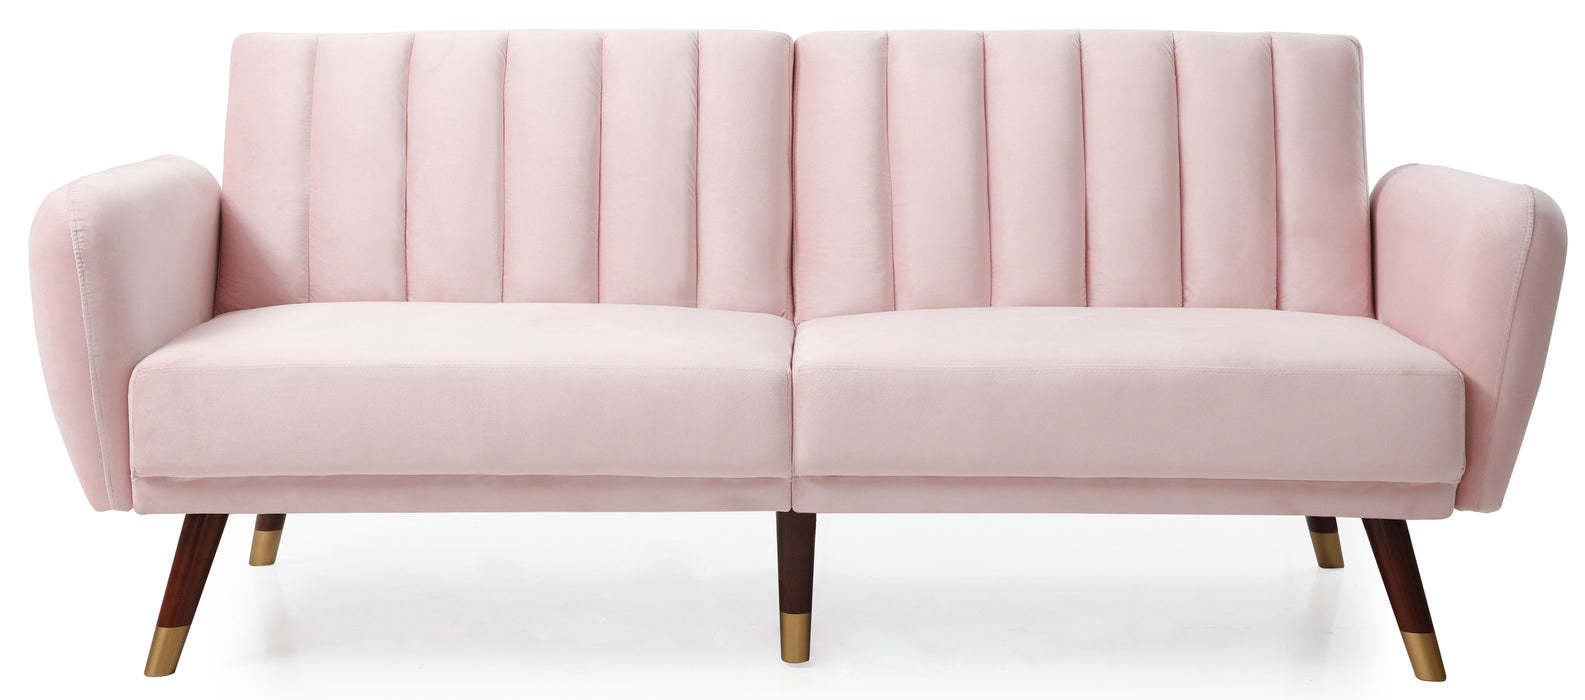 Siena - G0150-S Sofa Bed - Pink